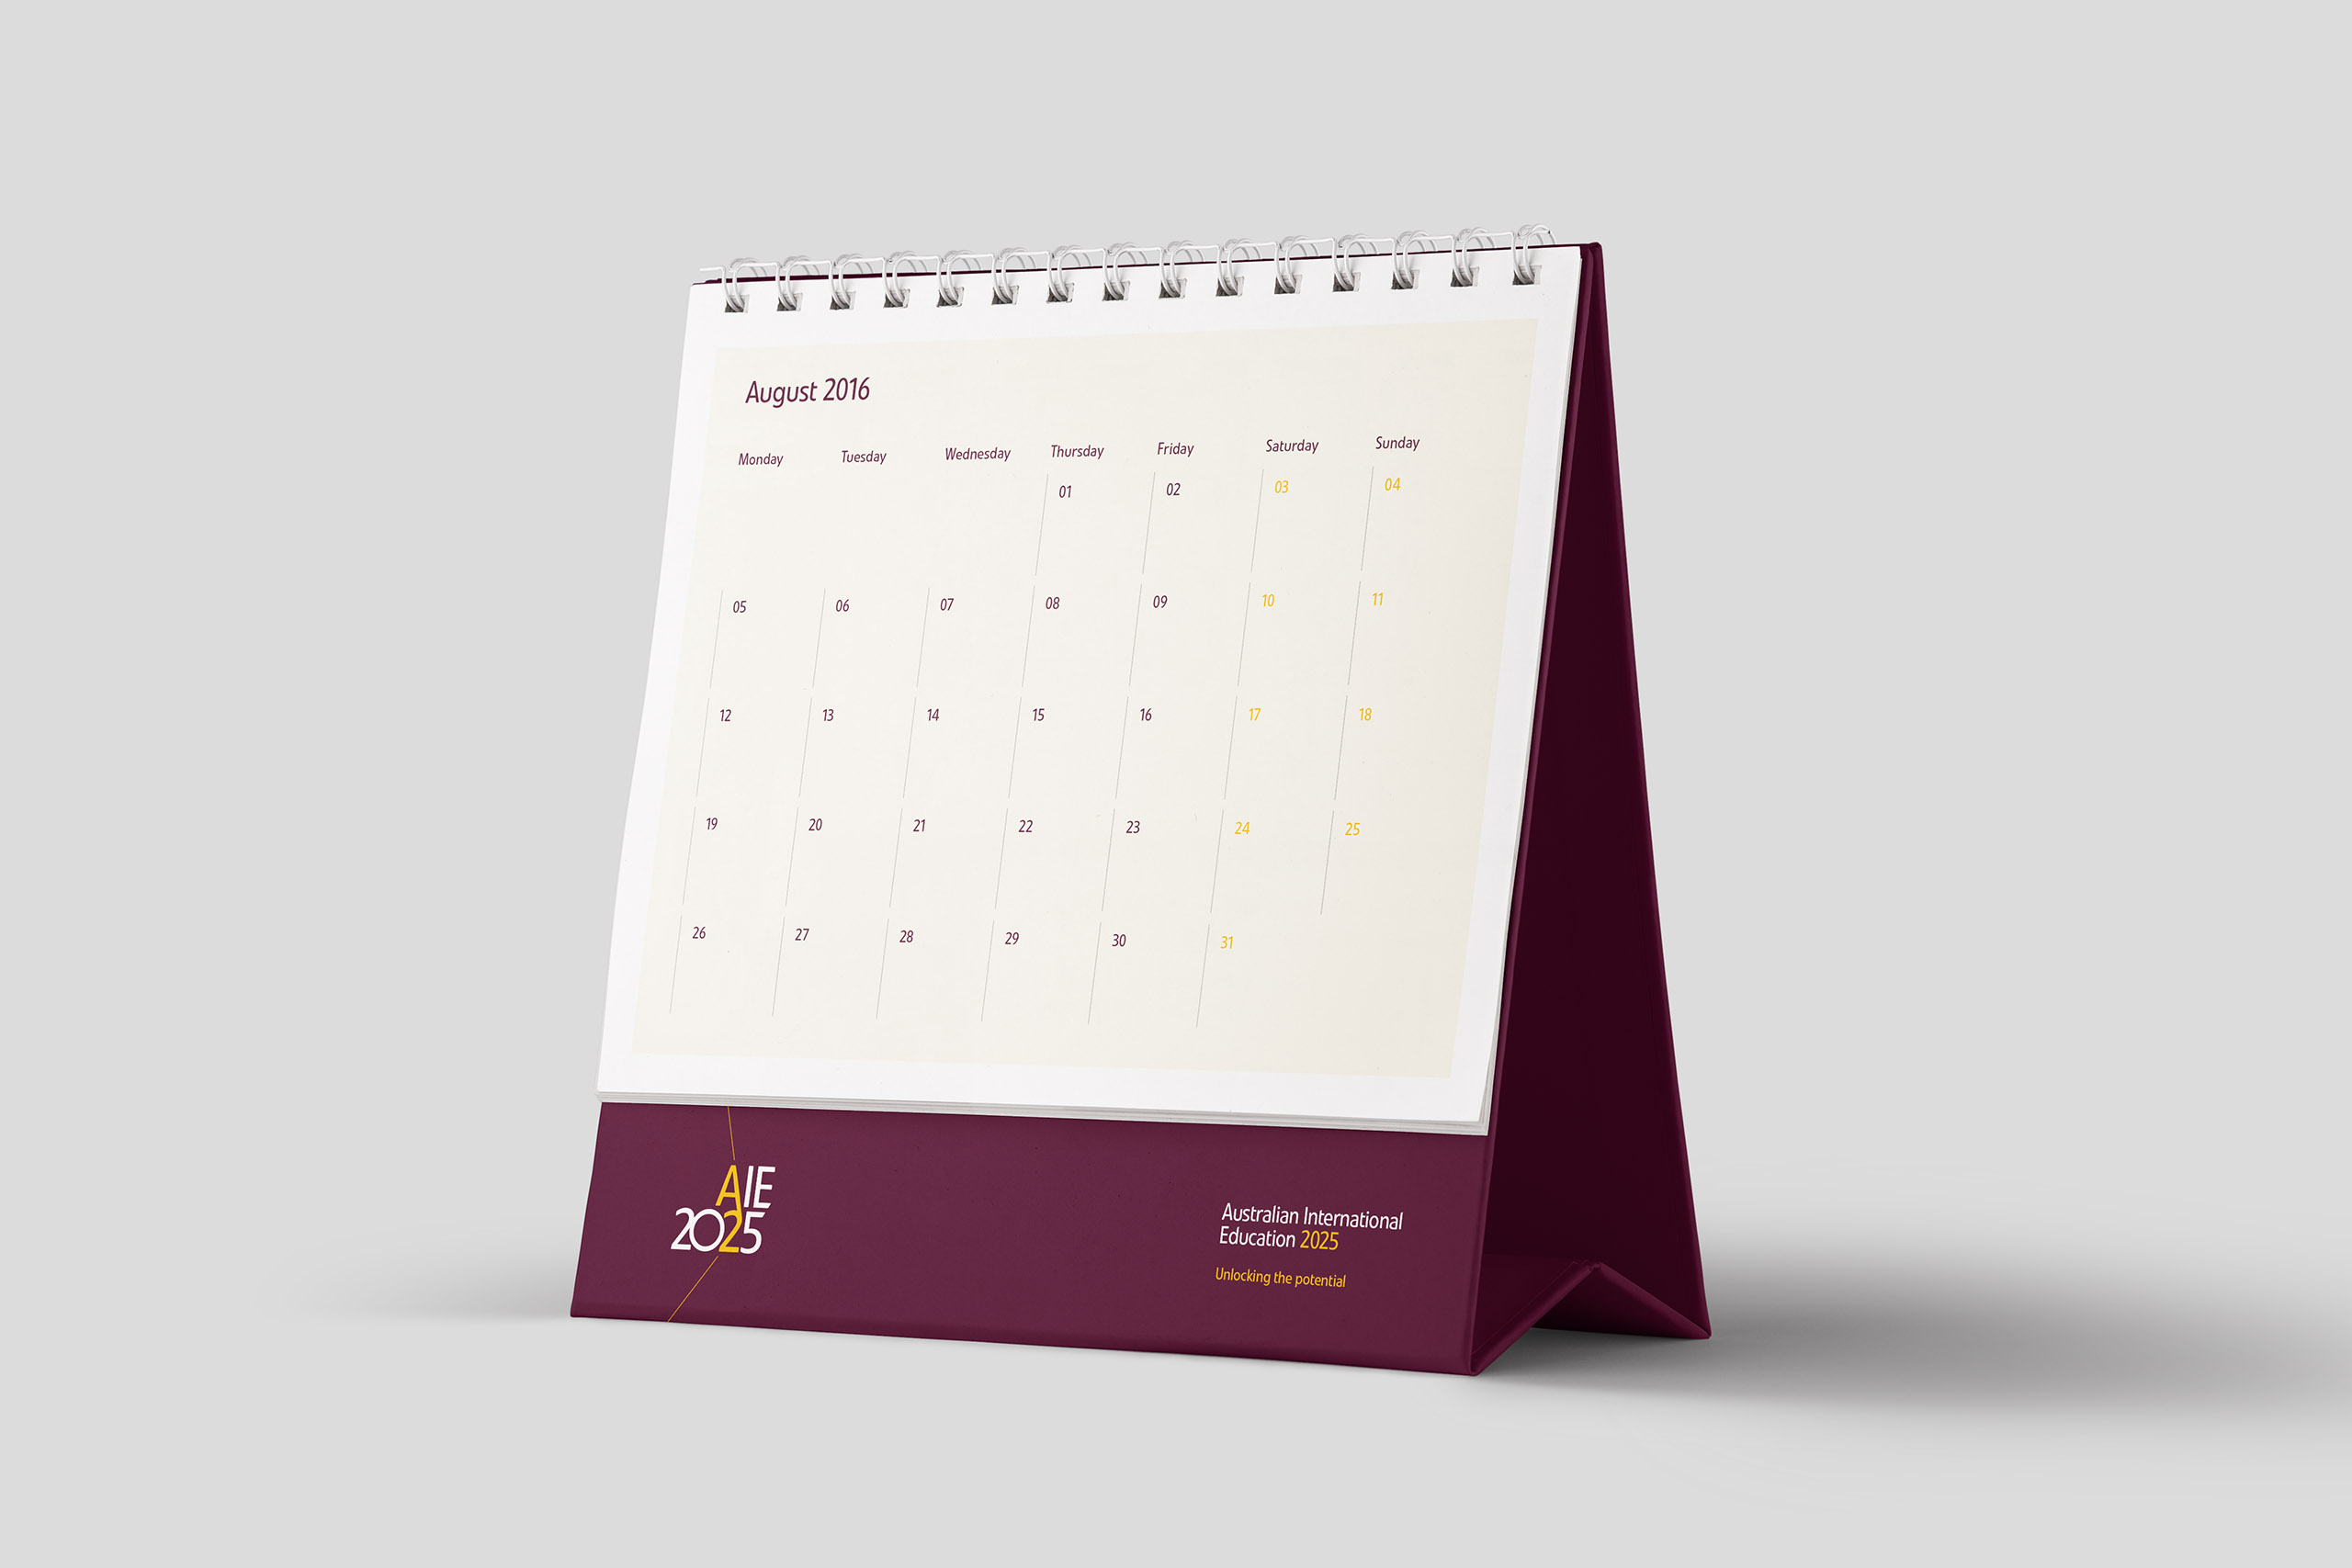 aie2025-desk-calendar-cropped